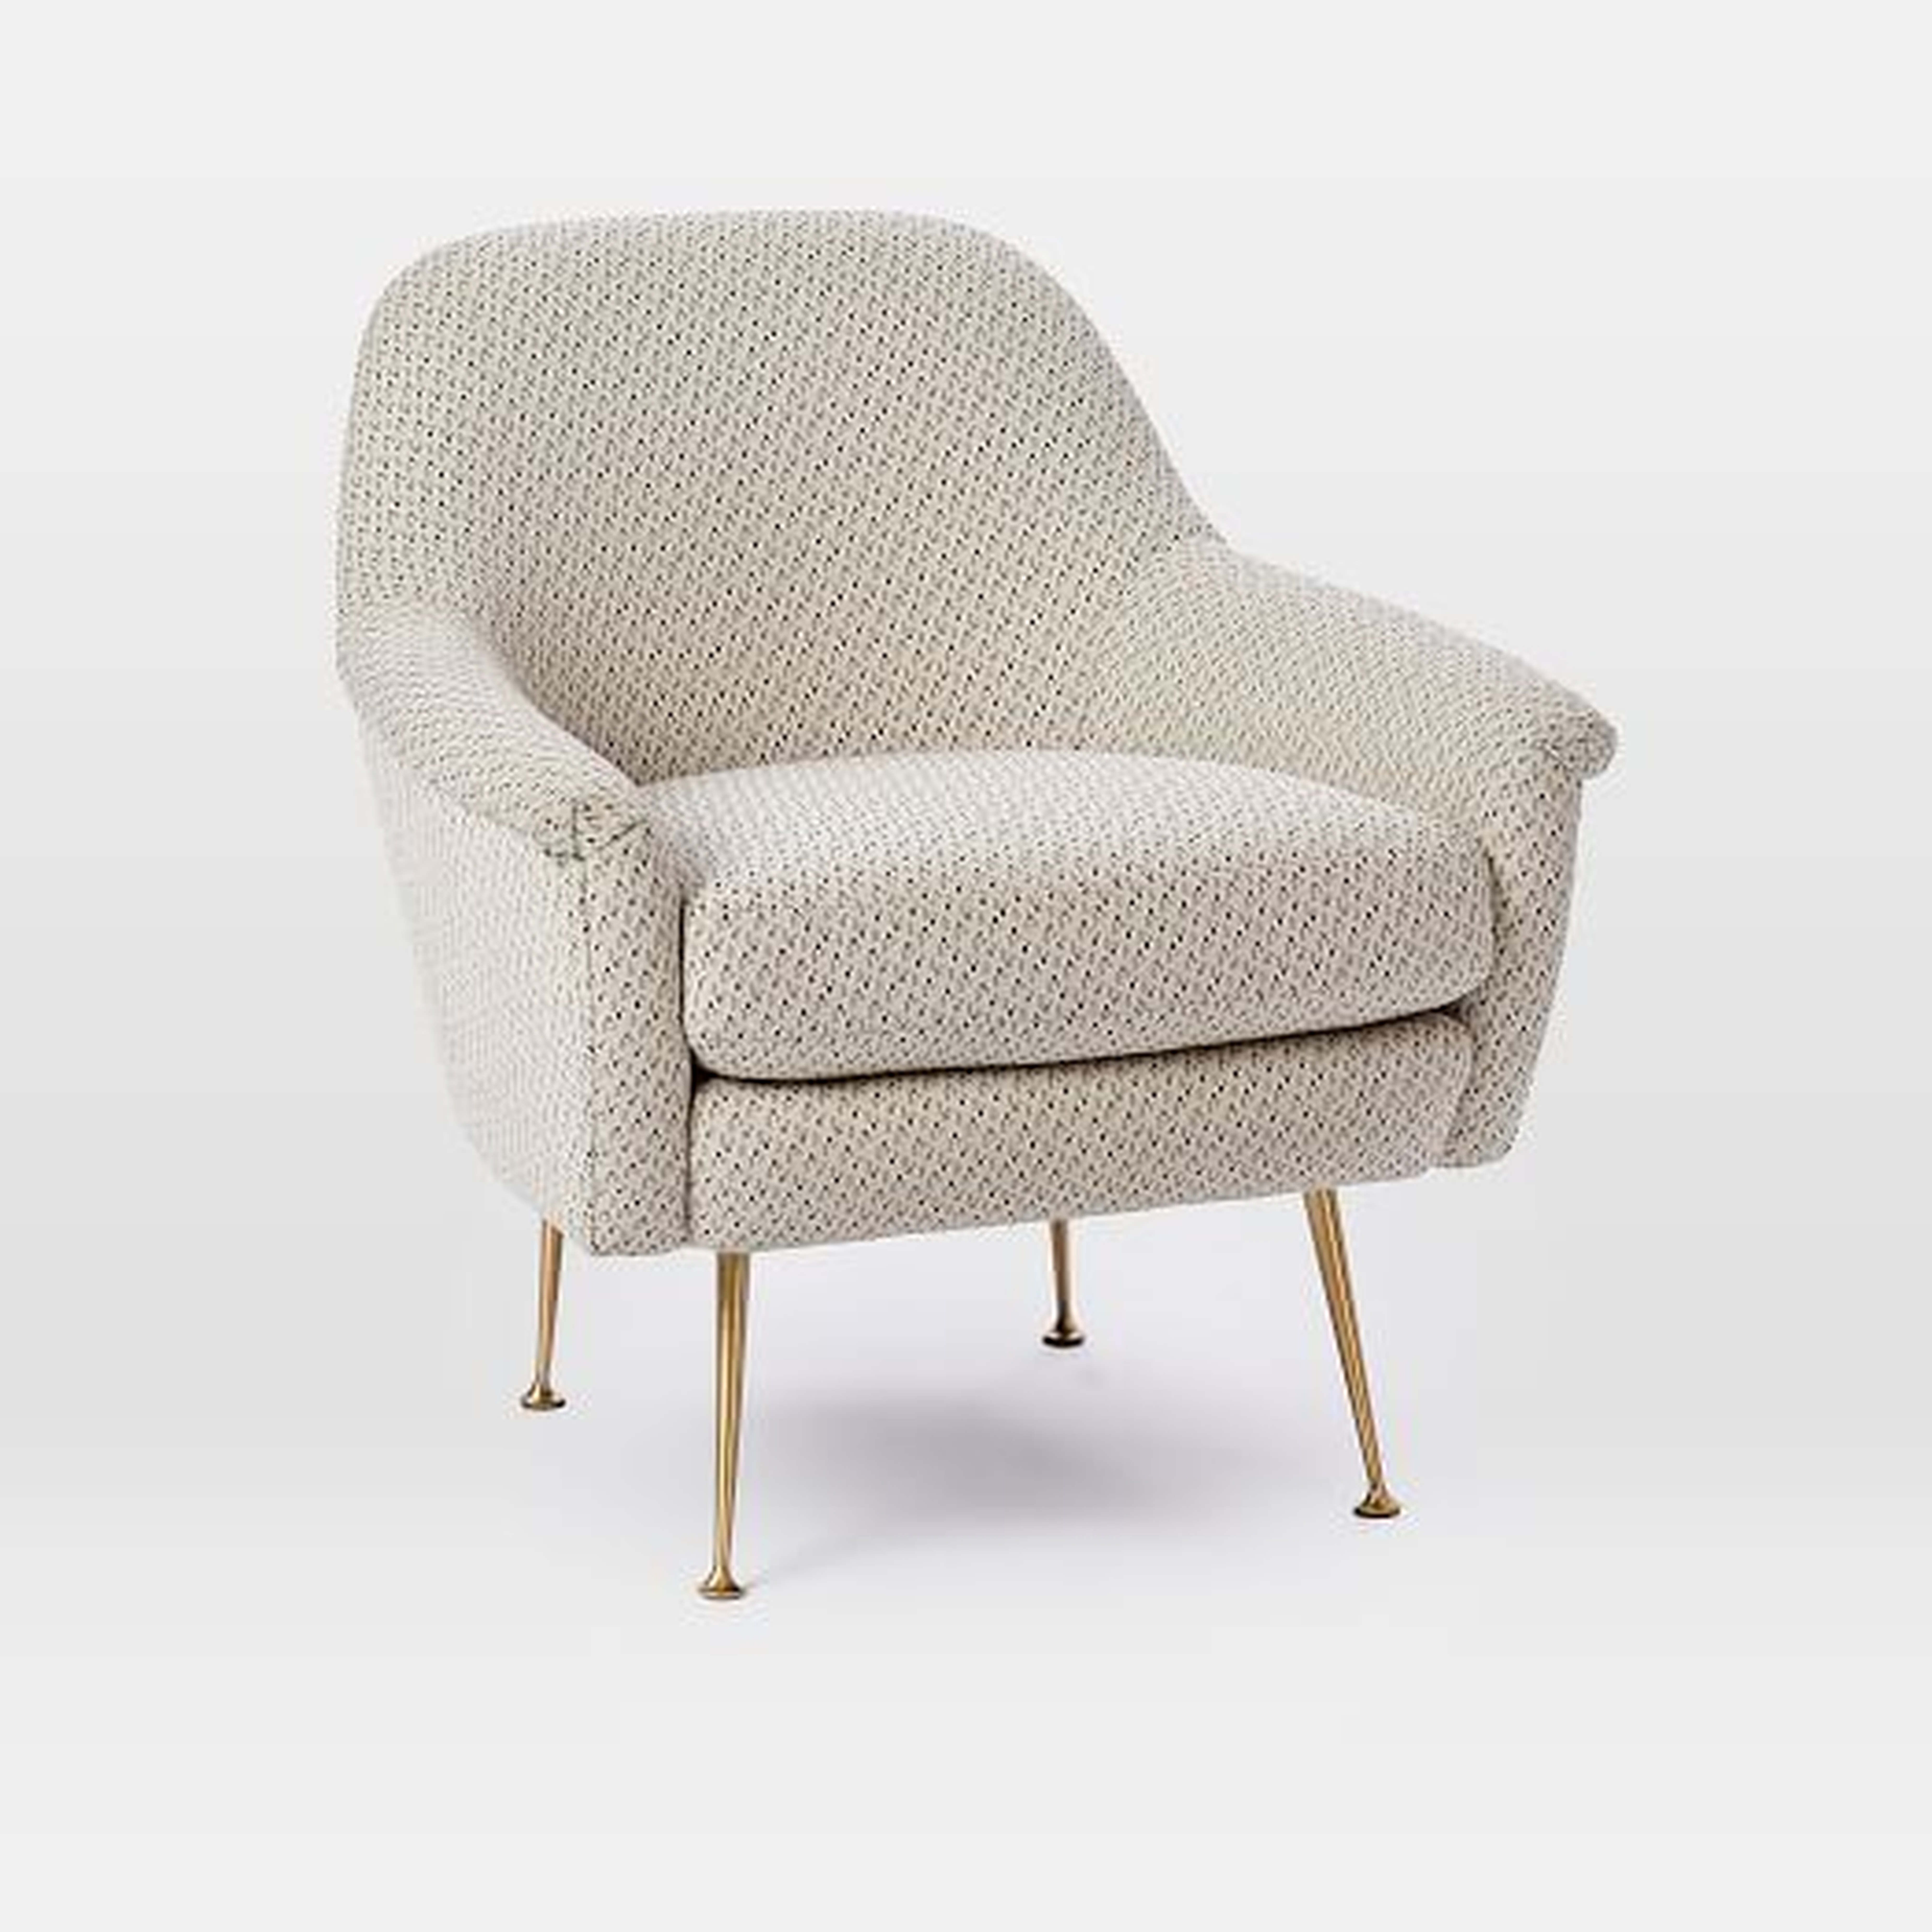 Phoebe Chair, Morse Dot - Ivory - West Elm